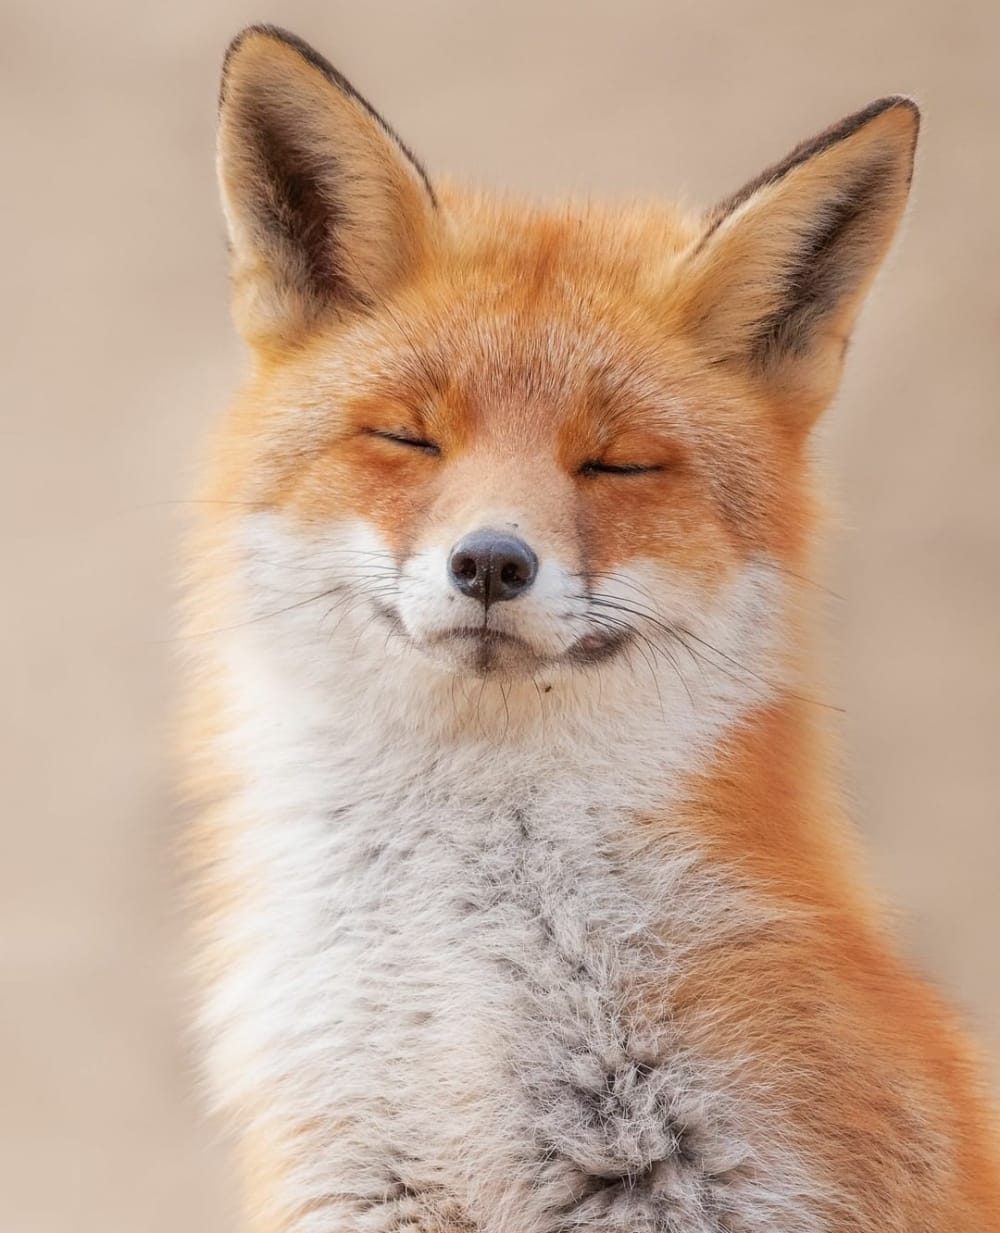 saved by gordori | Pet fox, Cute animals, Animals beautiful